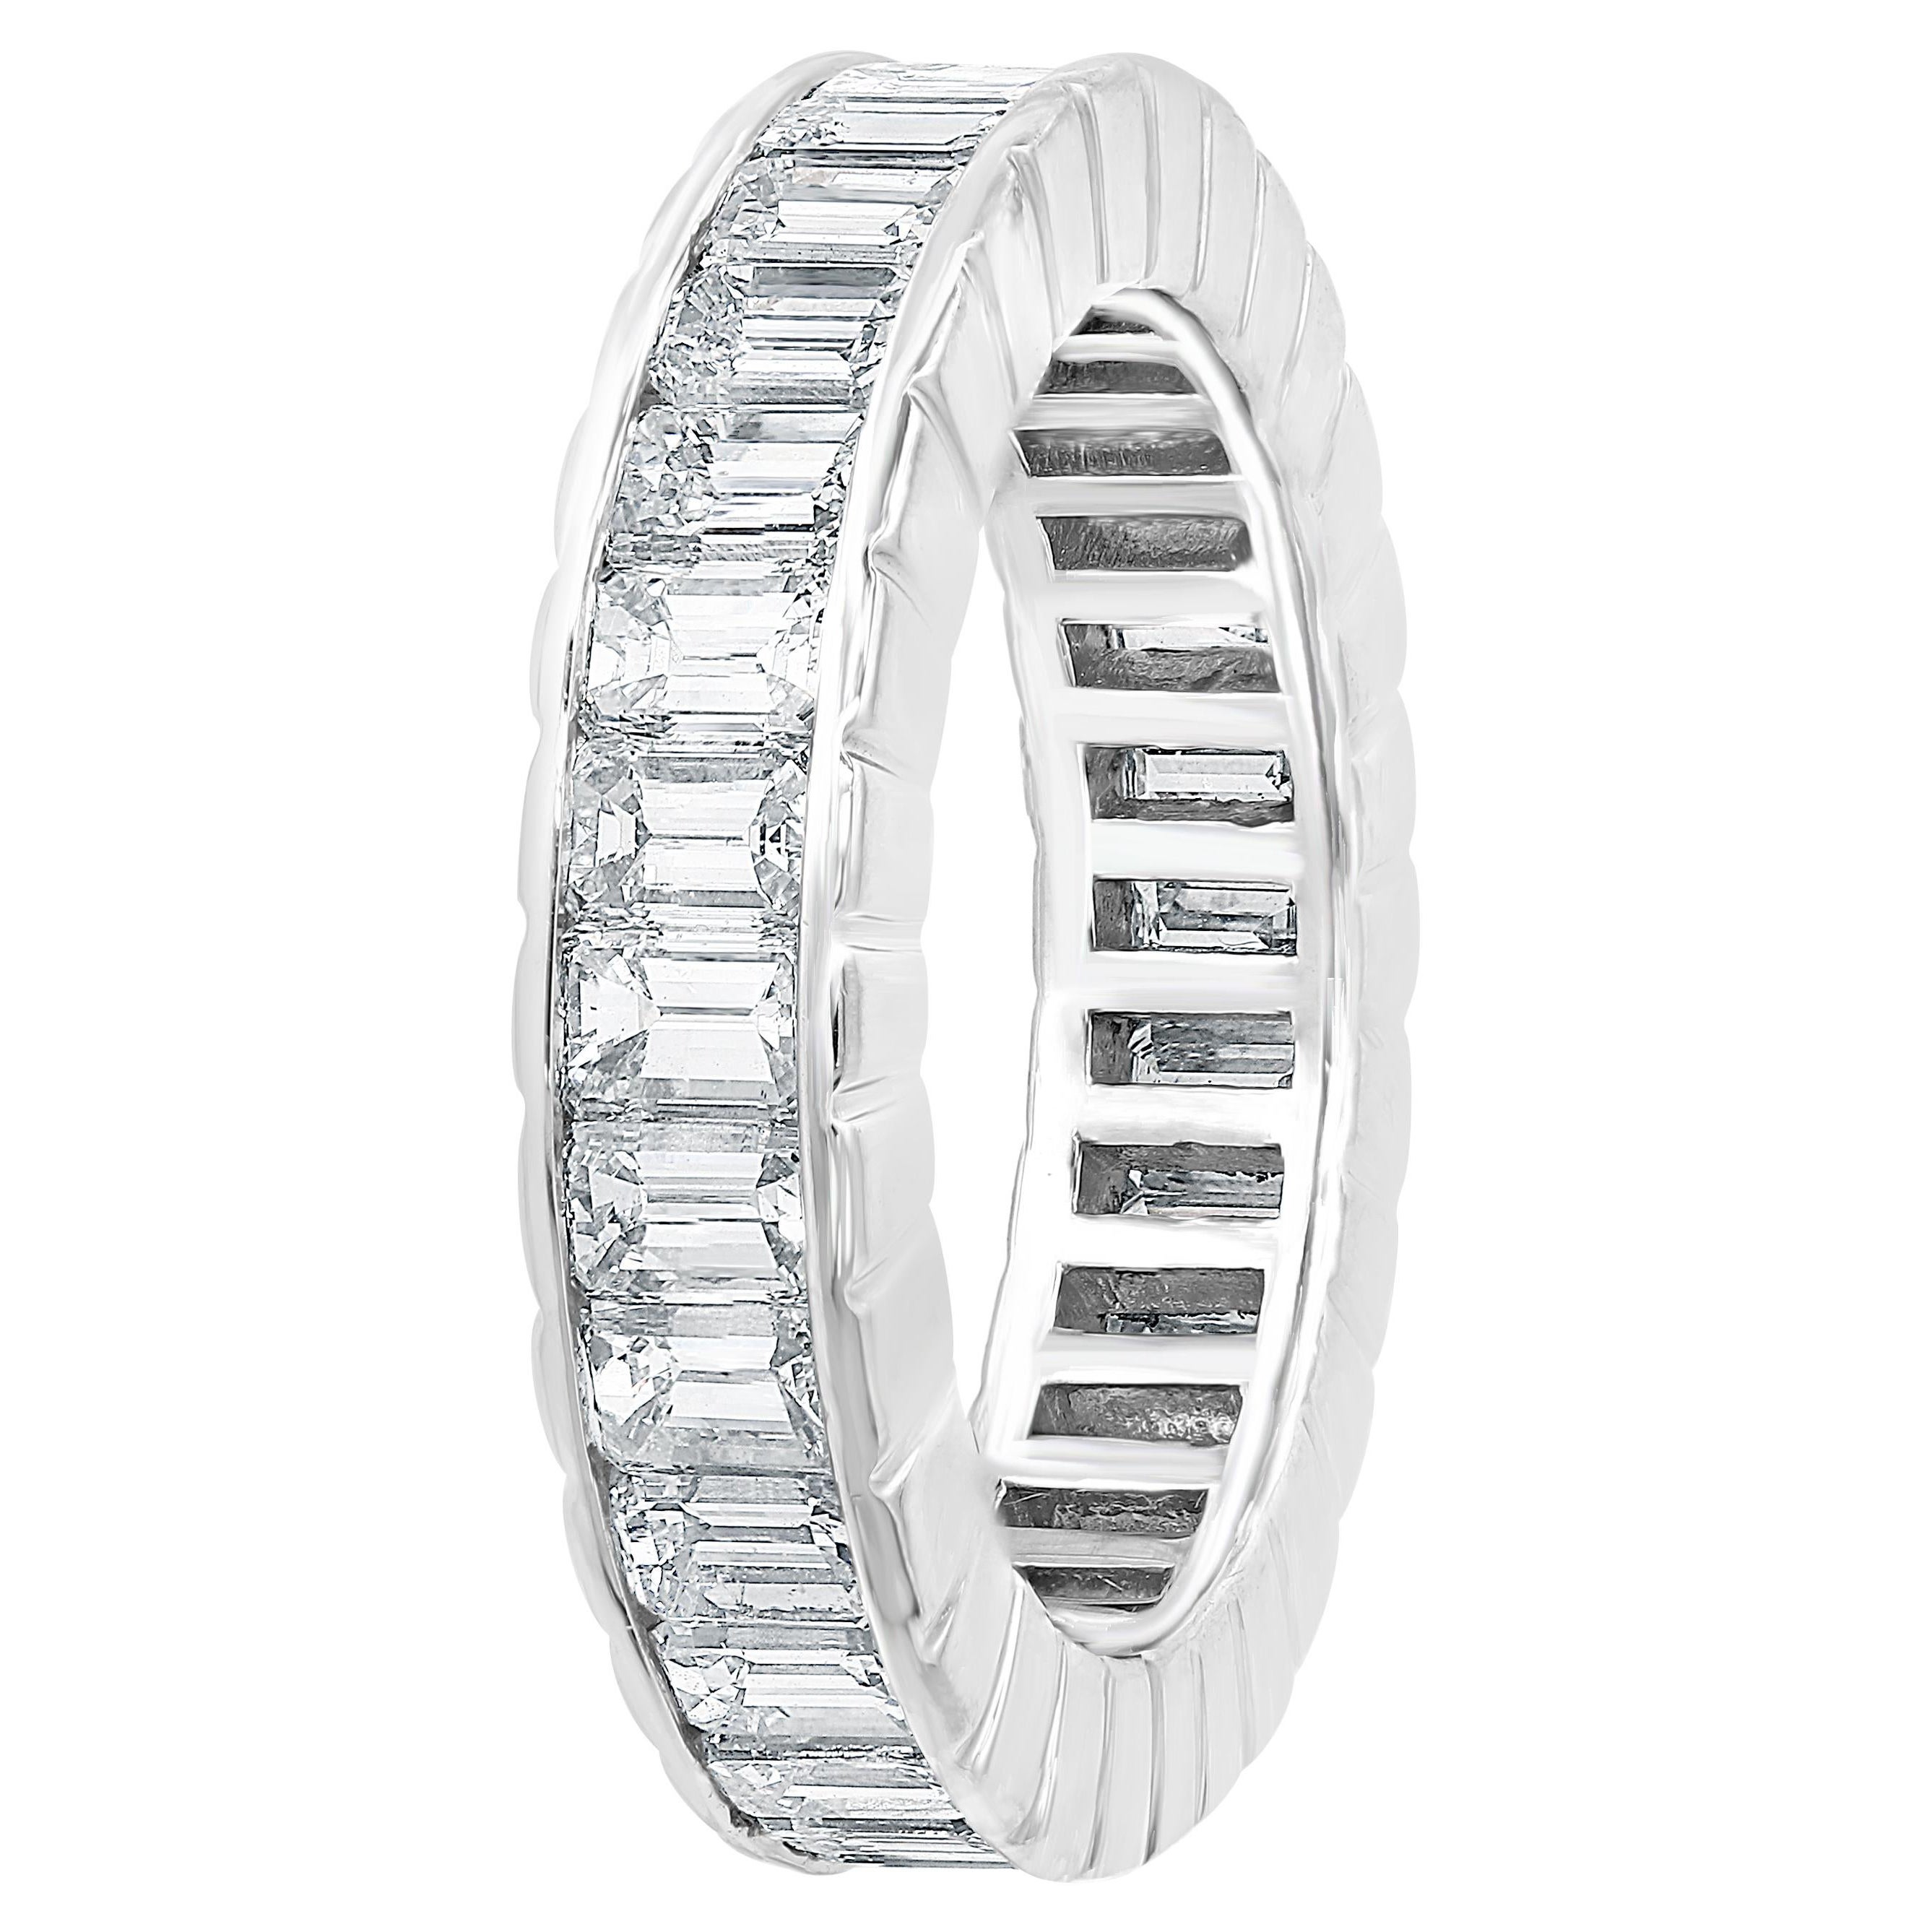 Auction - 3.01 Carat Emerald Cut Diamond Eternity Band Ring